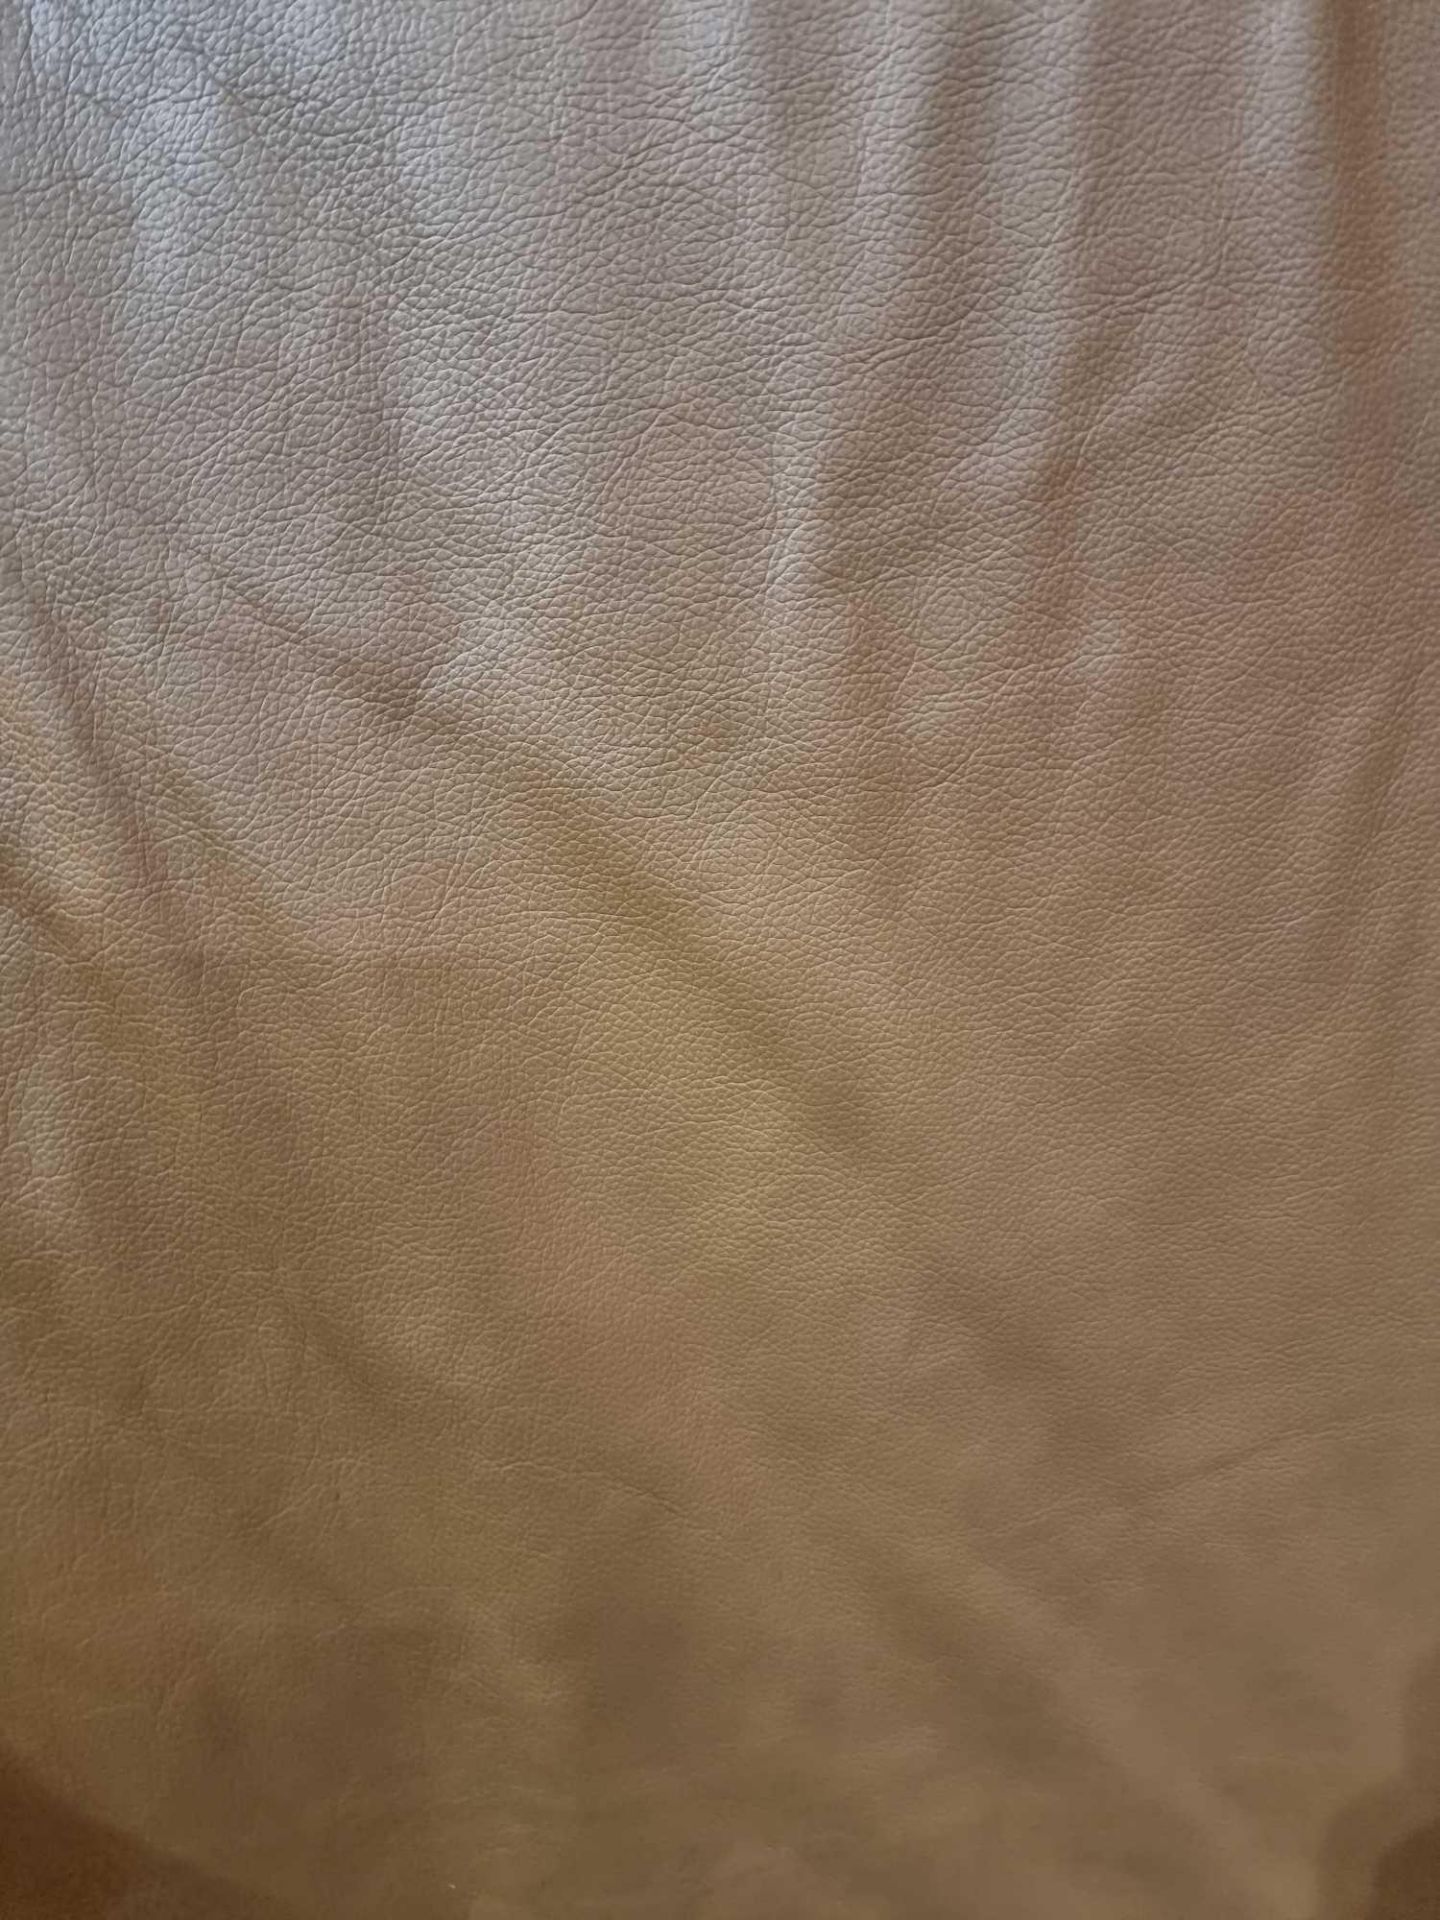 Trim International Dakota Tan Leather Hide approximately 5 28M2 2 4 x 2 2cm ( Hide No,182) - Image 2 of 2